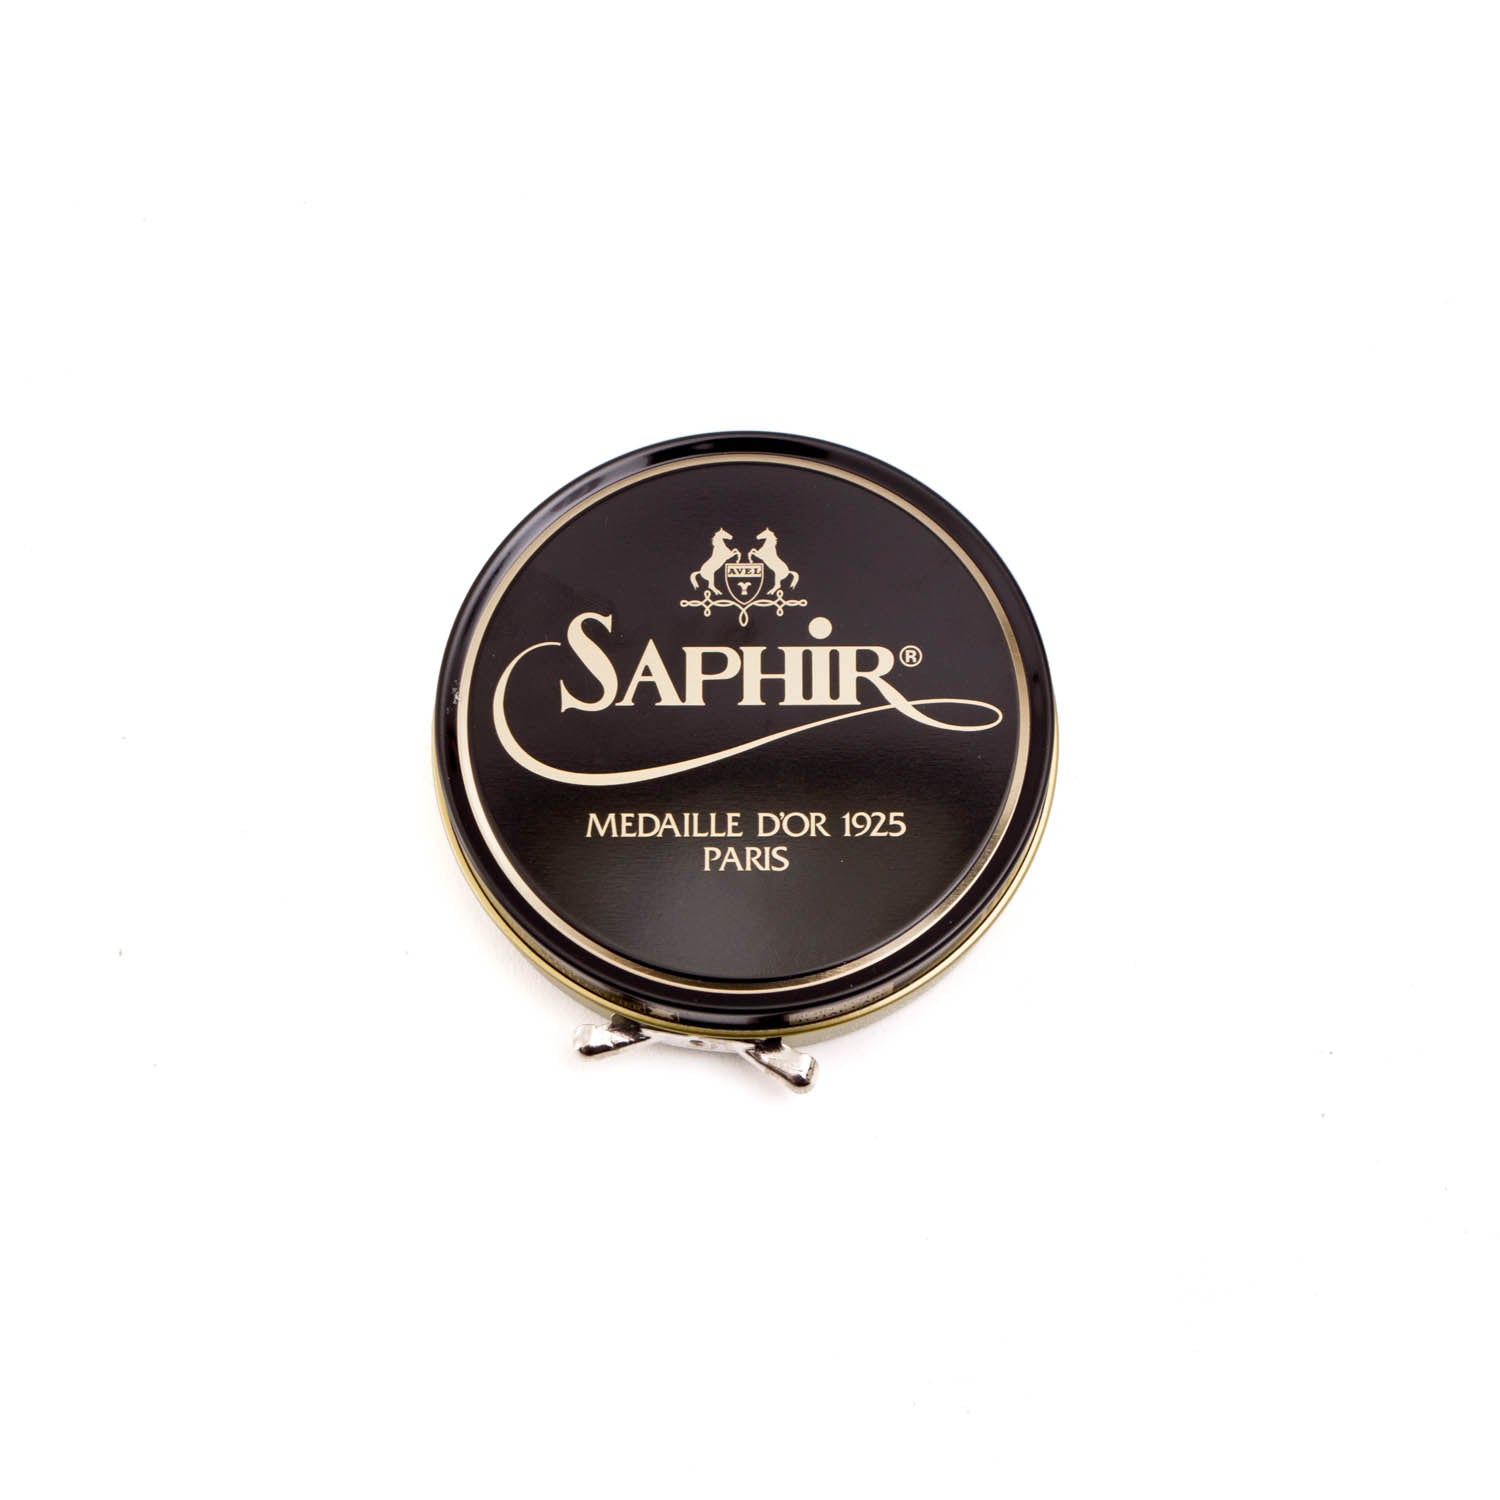 A tin of Saphir Dubbin Graisse Conditioner by KirbyAllison.com.